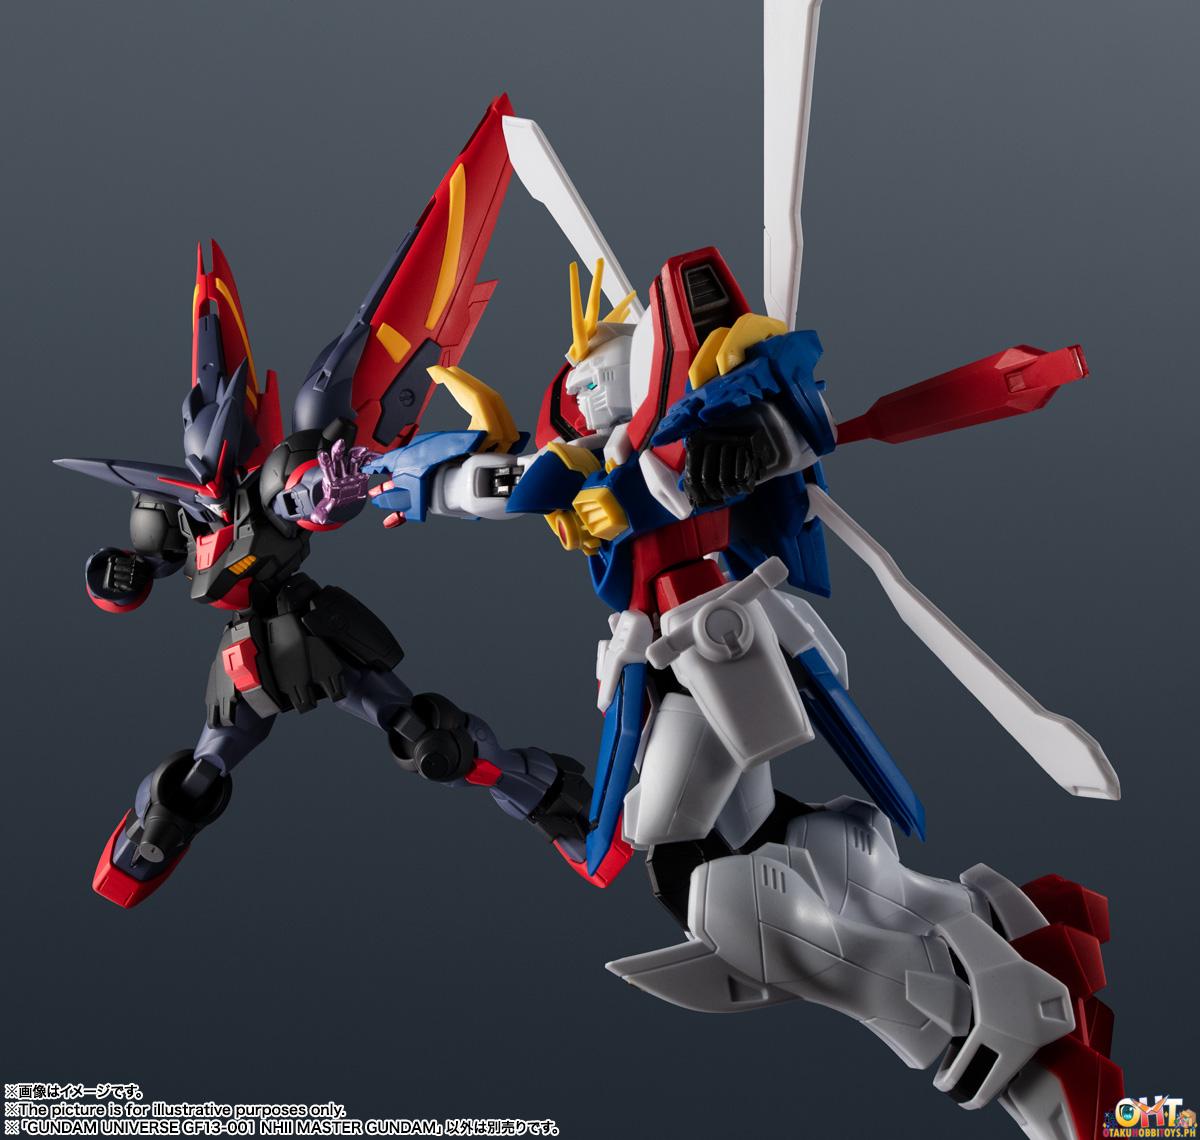 Bandai GUNDAM UNIVERSE GF13-001 NHII Master Gundam  – Mobile Fighter G Gundam